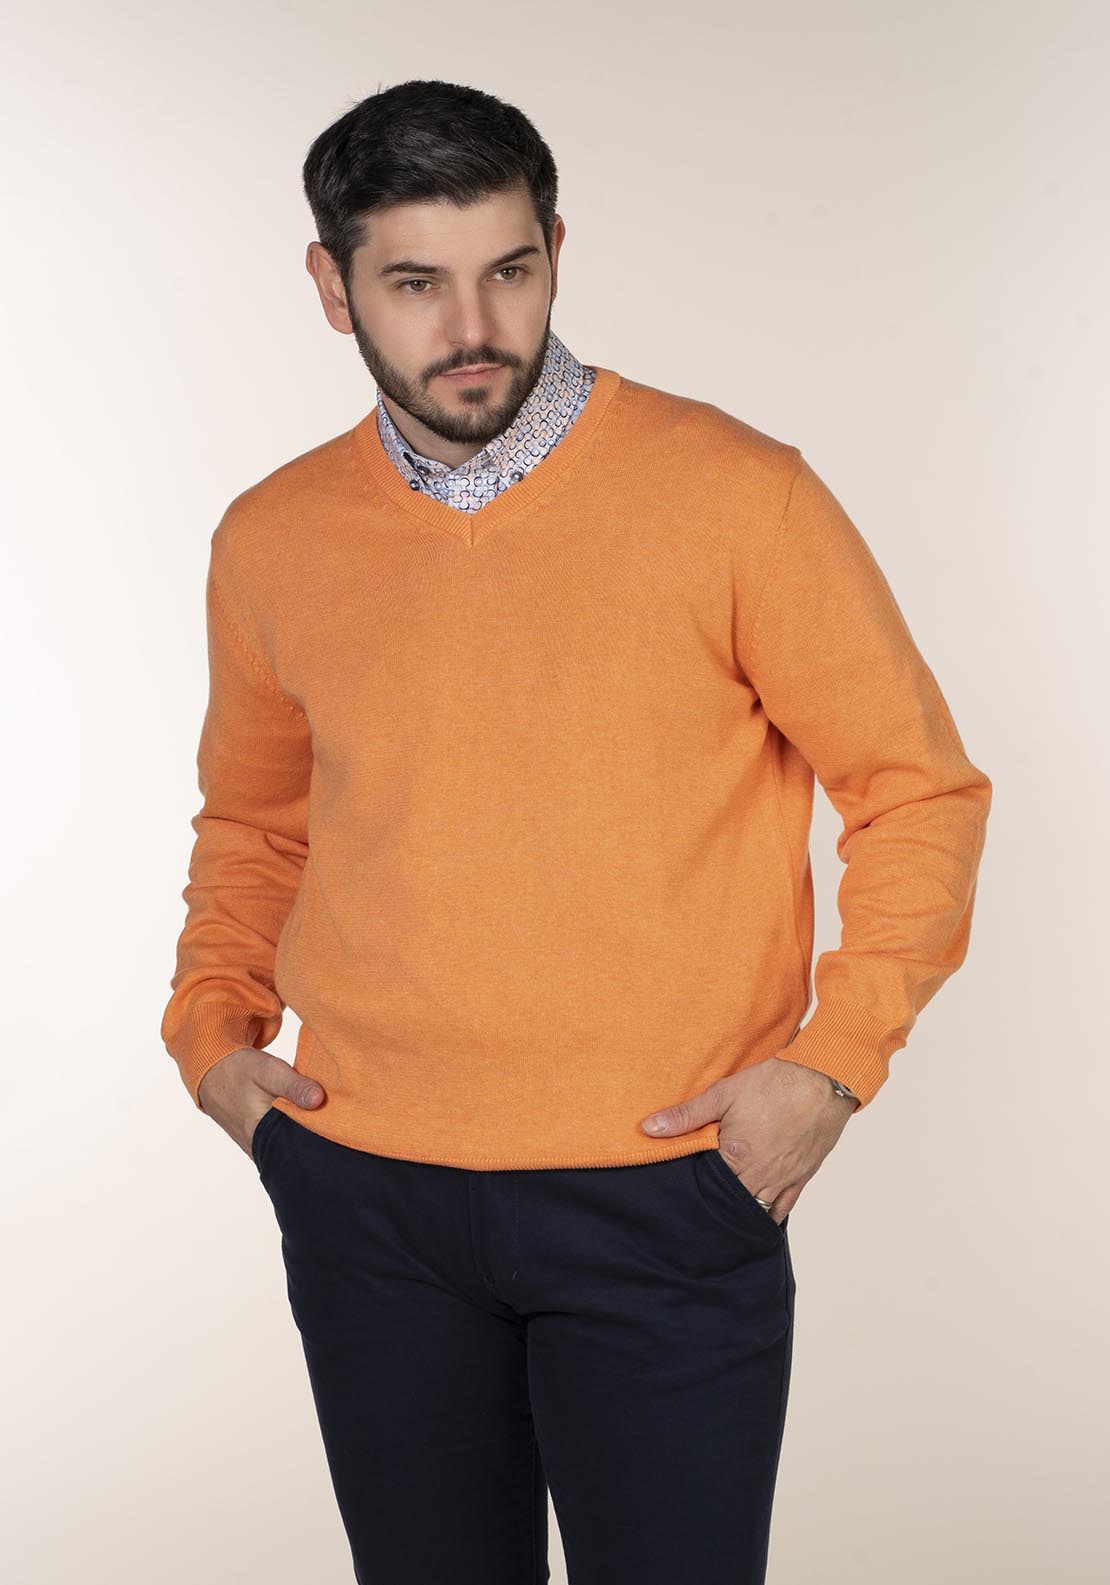 Yeats Plain Cotton V Neck Sweaters Orange 2 Shaws Department Stores